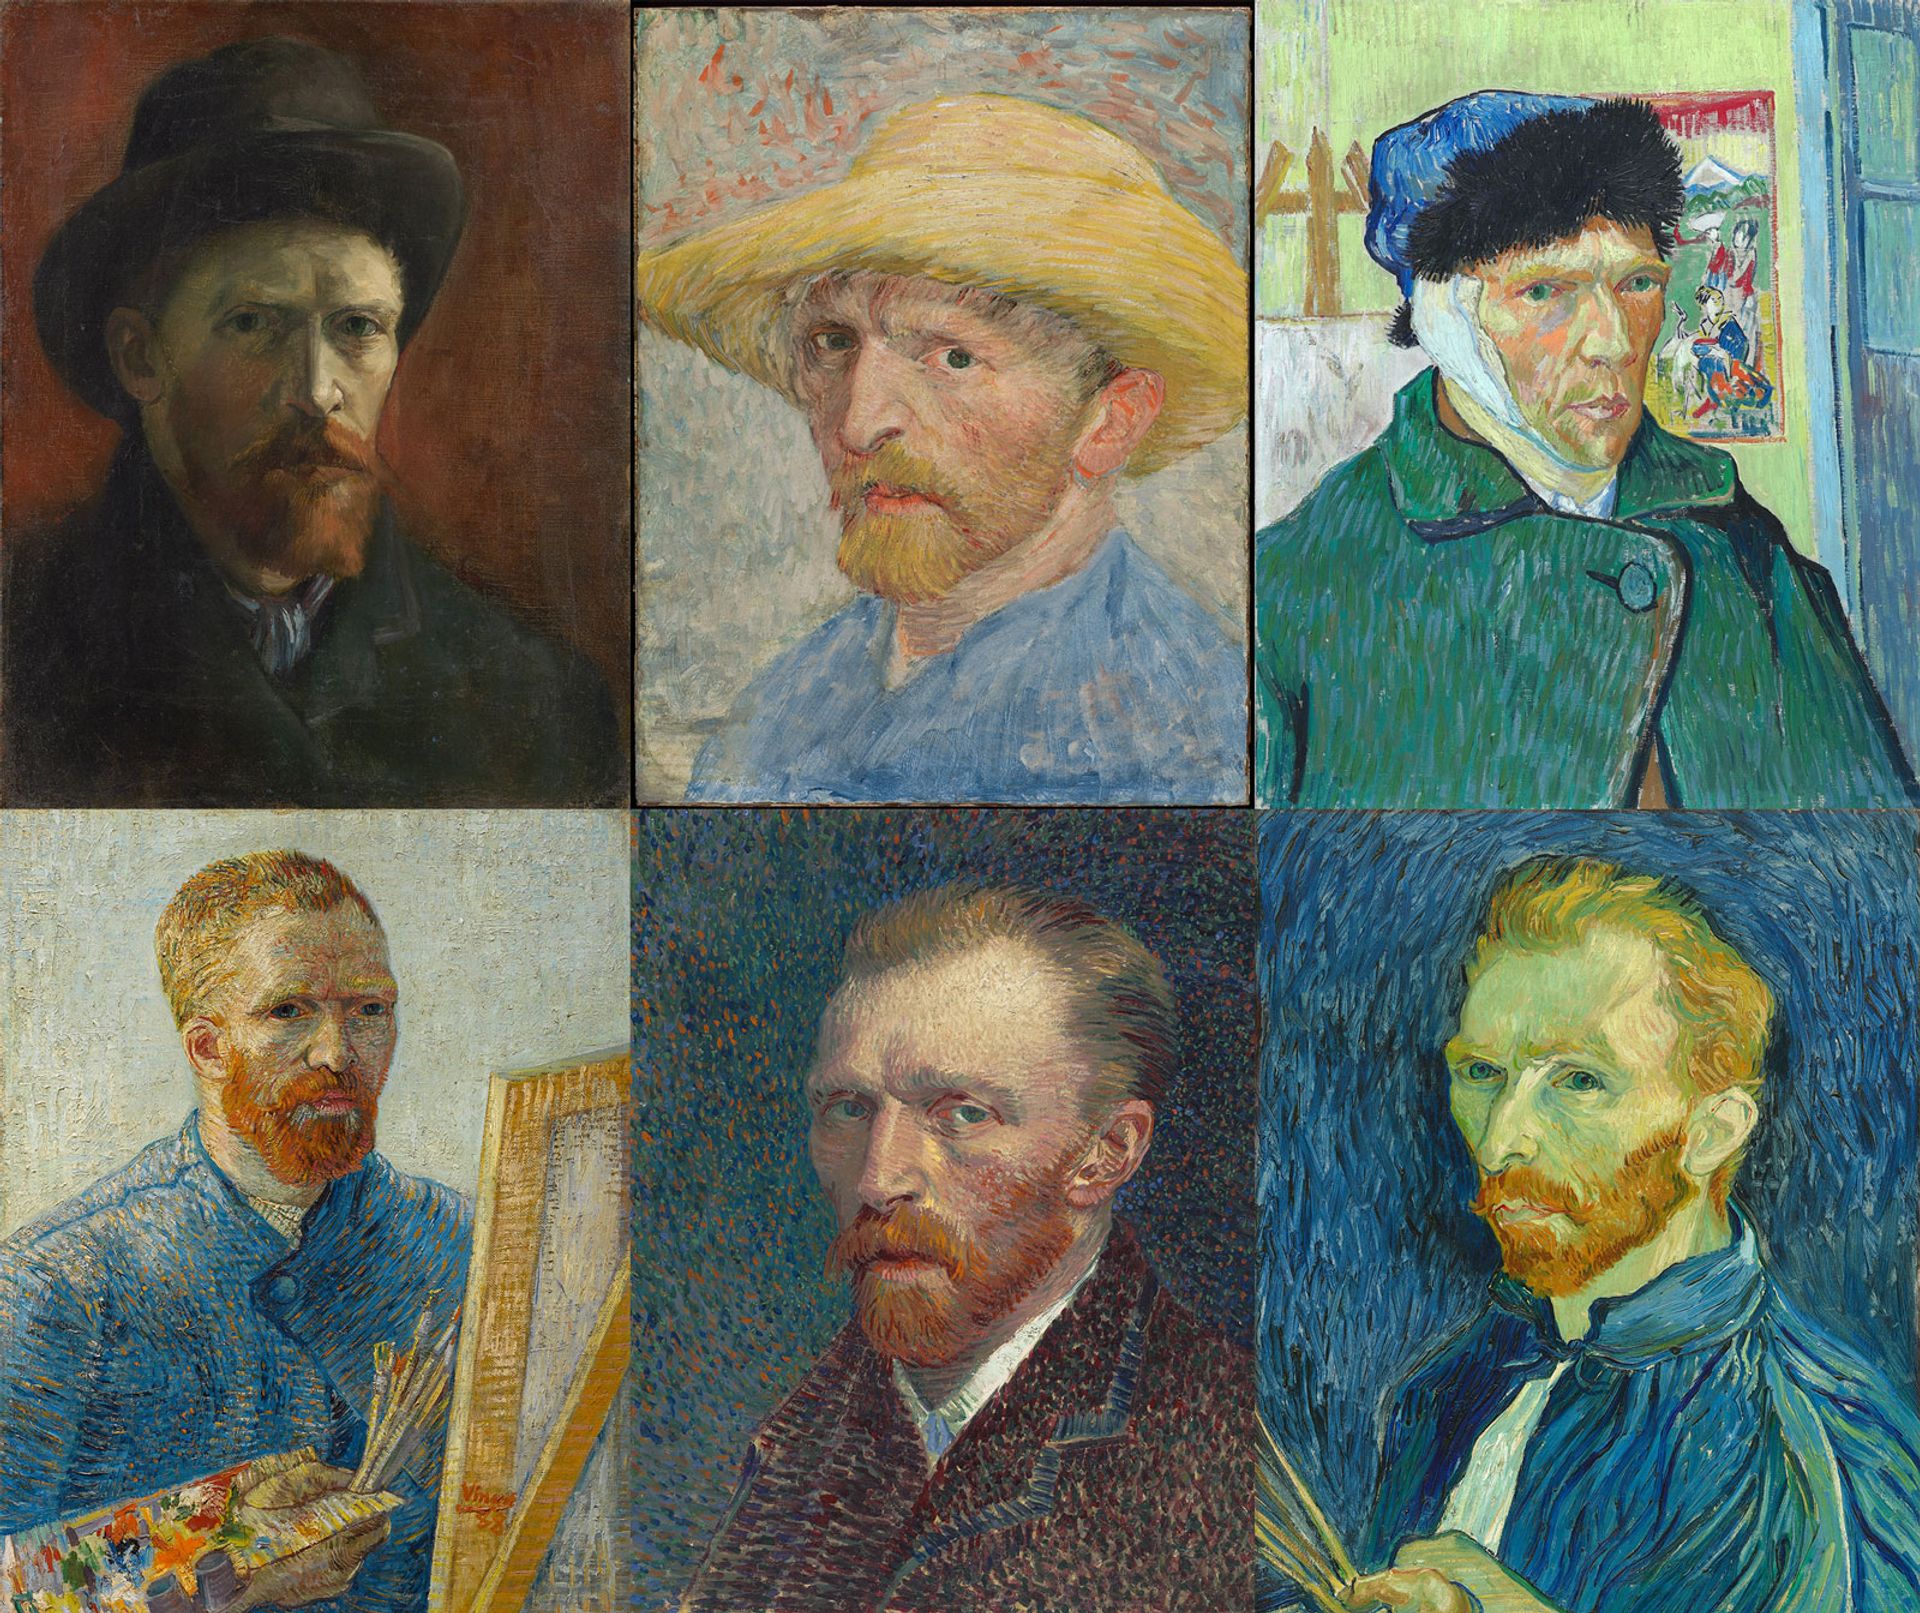 Major Vincent van Gogh self-portrait exhibition to open in London next year